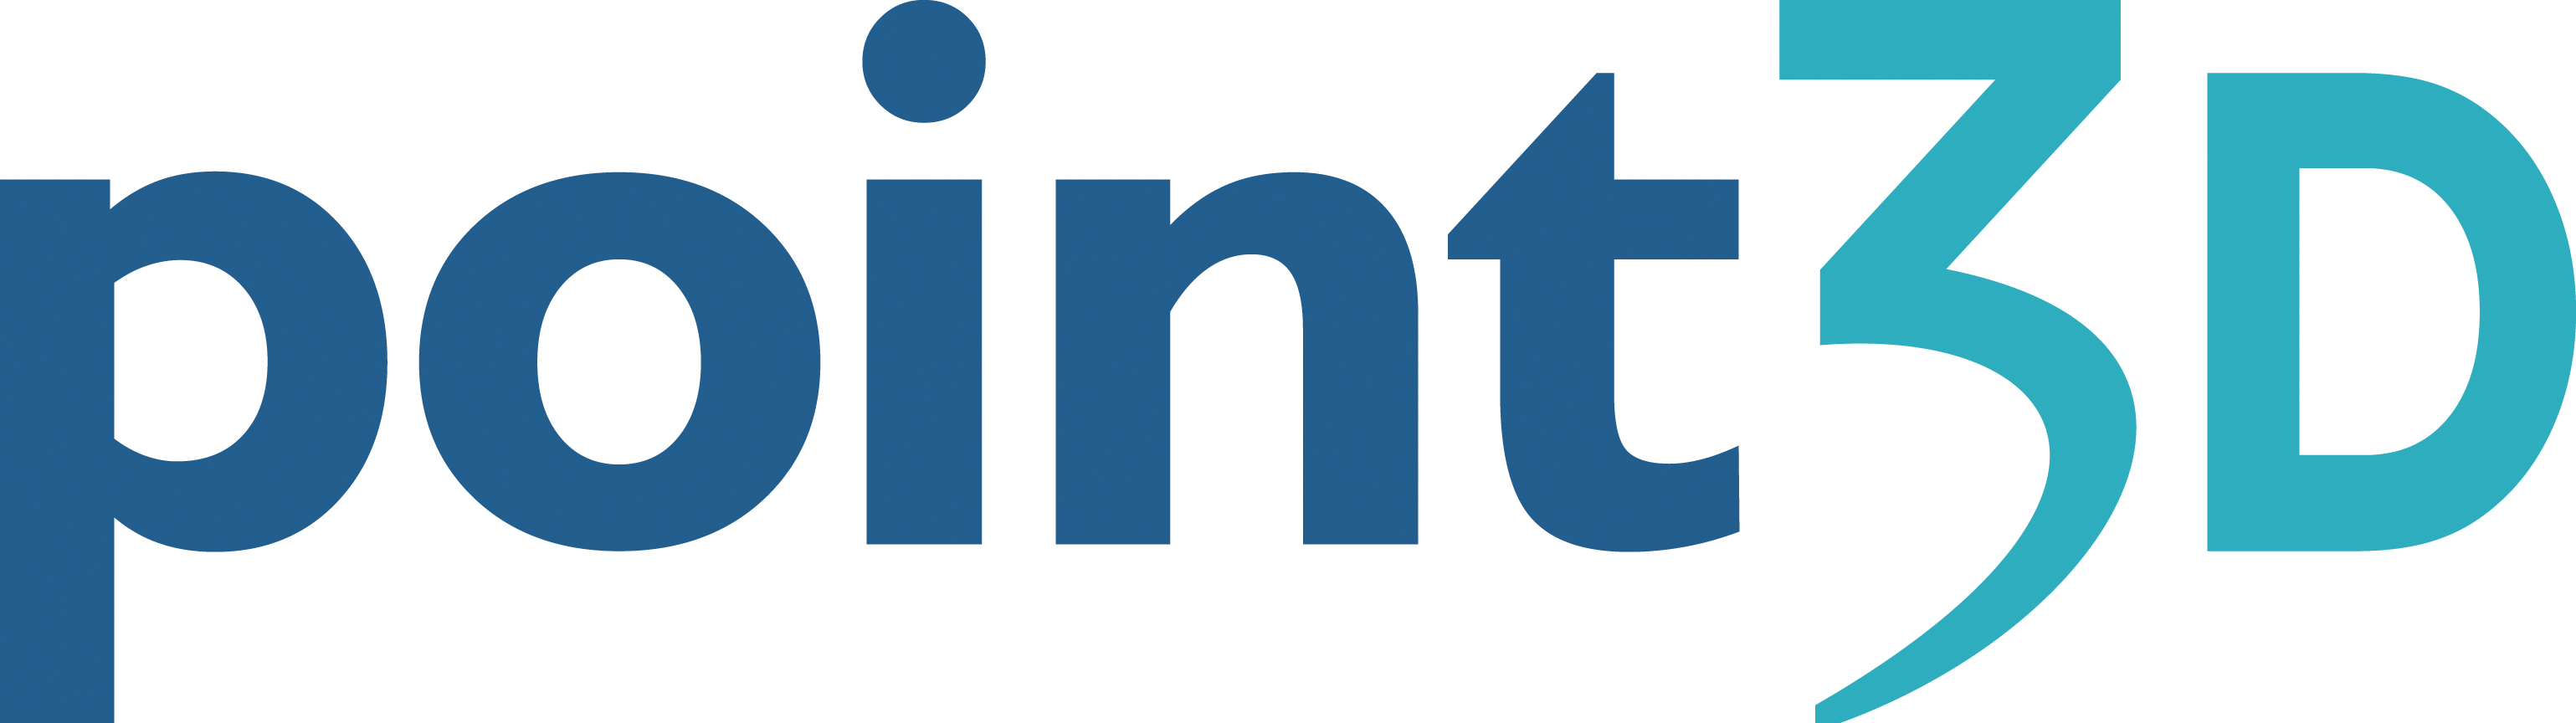 point3d-logo_trans_hires